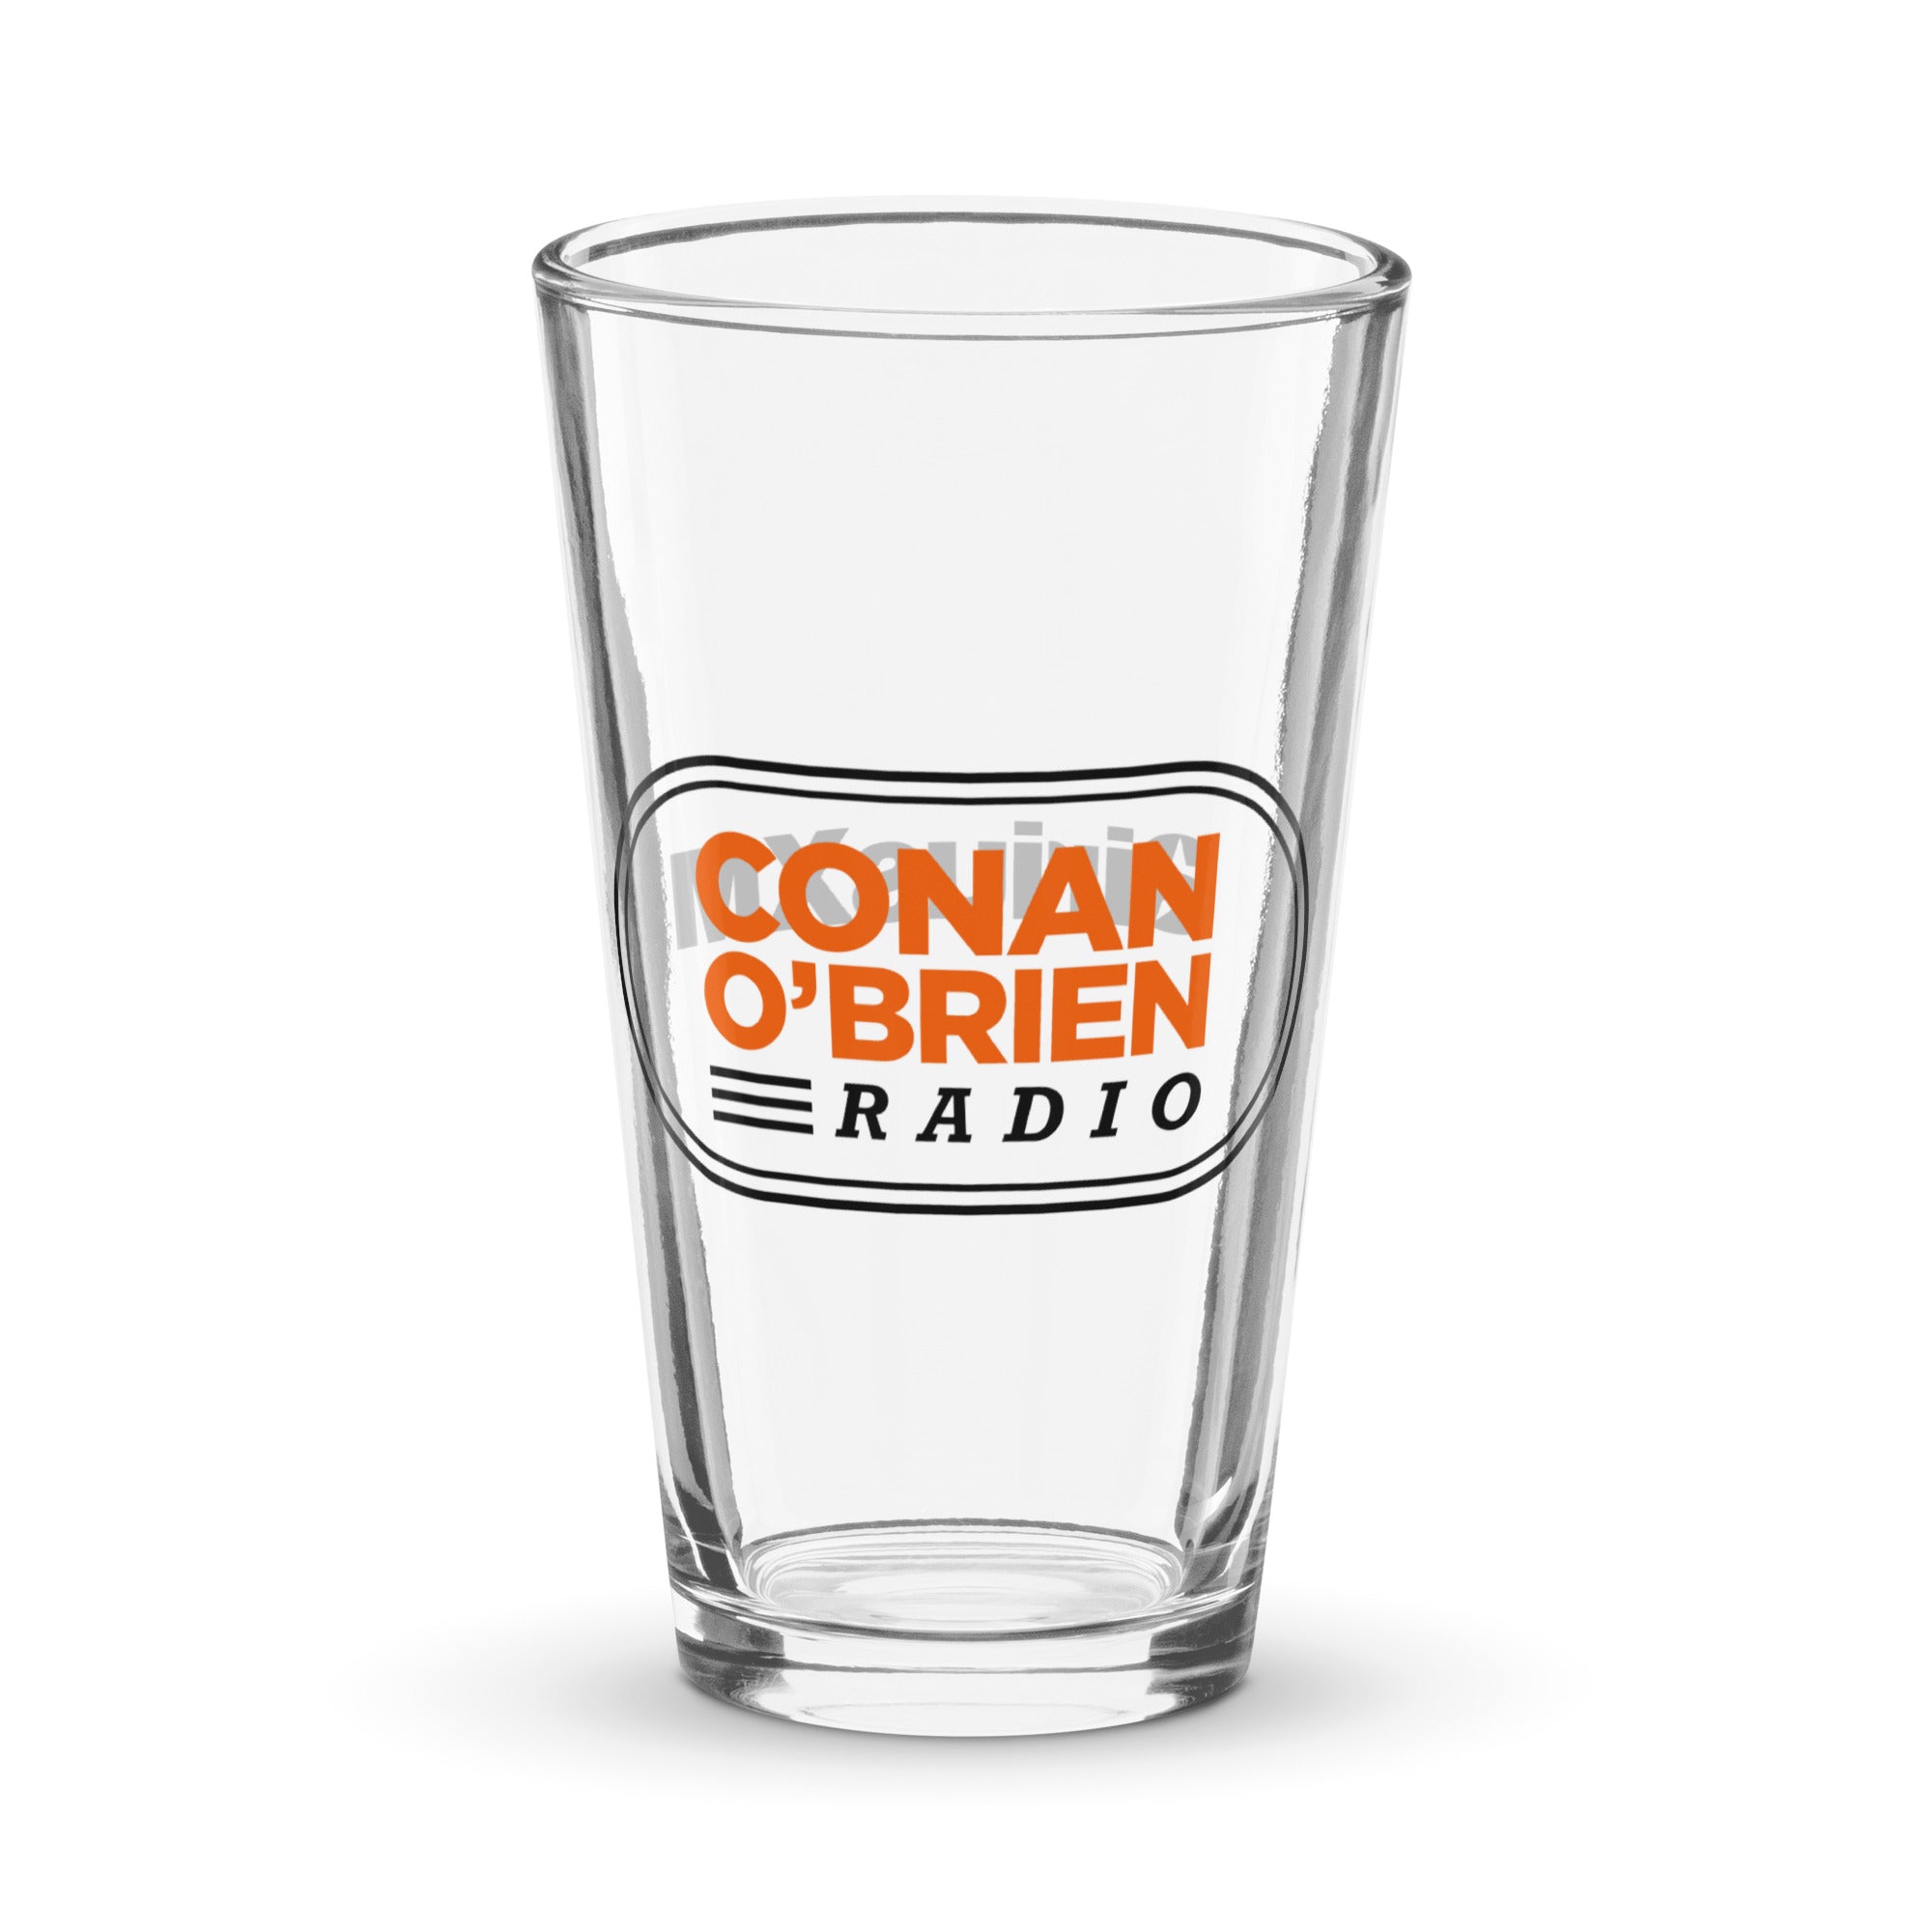 Conan O'Brien Radio: Pint Glass